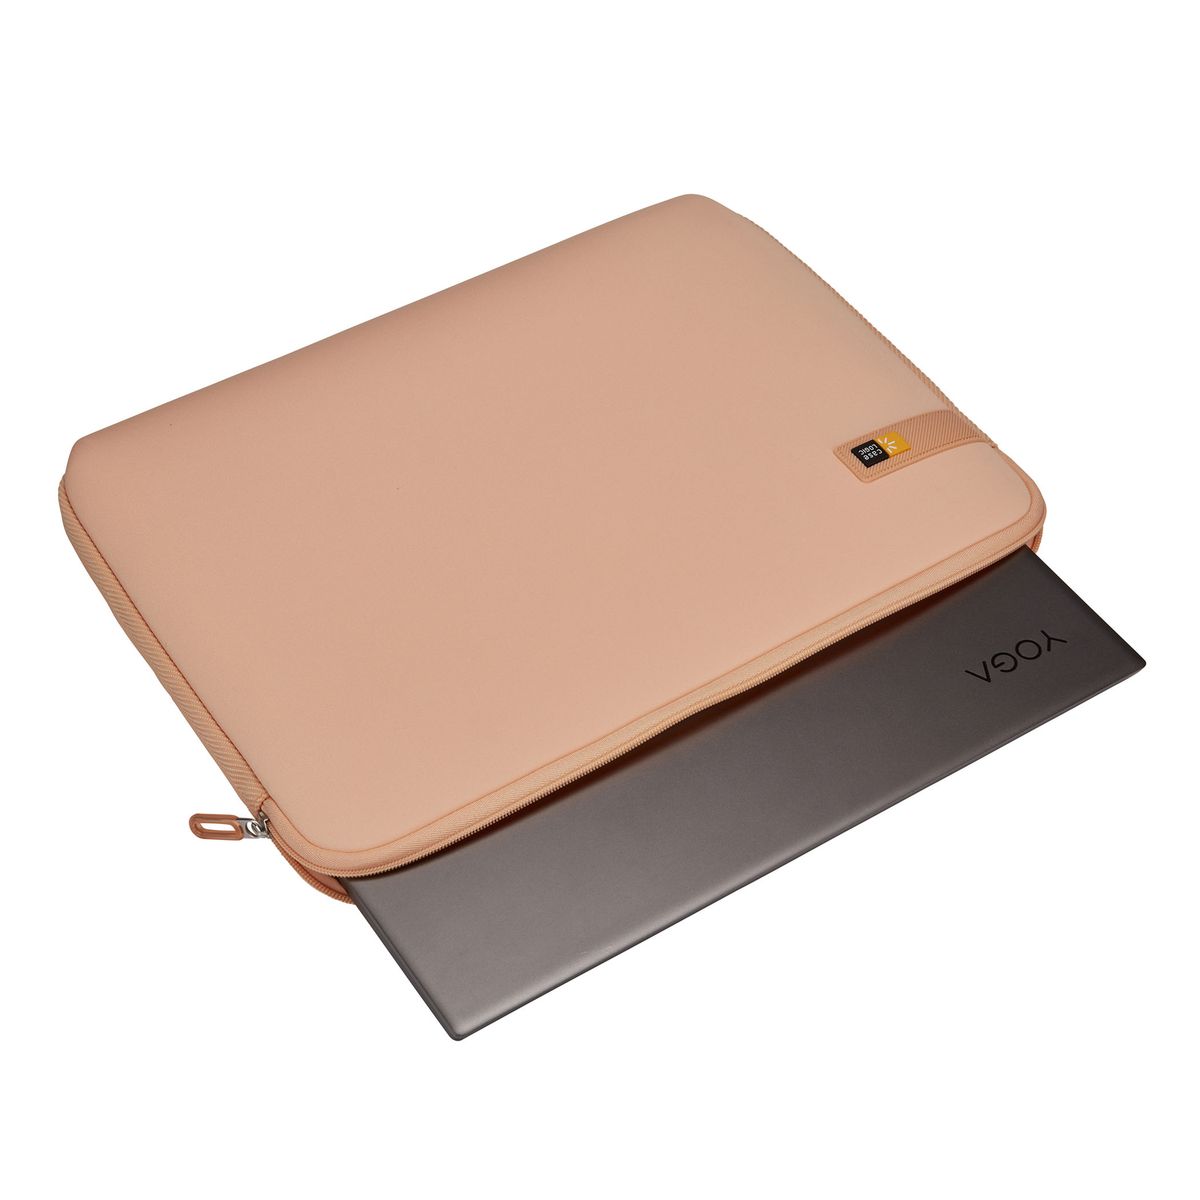 Case Logic Laptop Sleeve 15-16" laptop sleeve